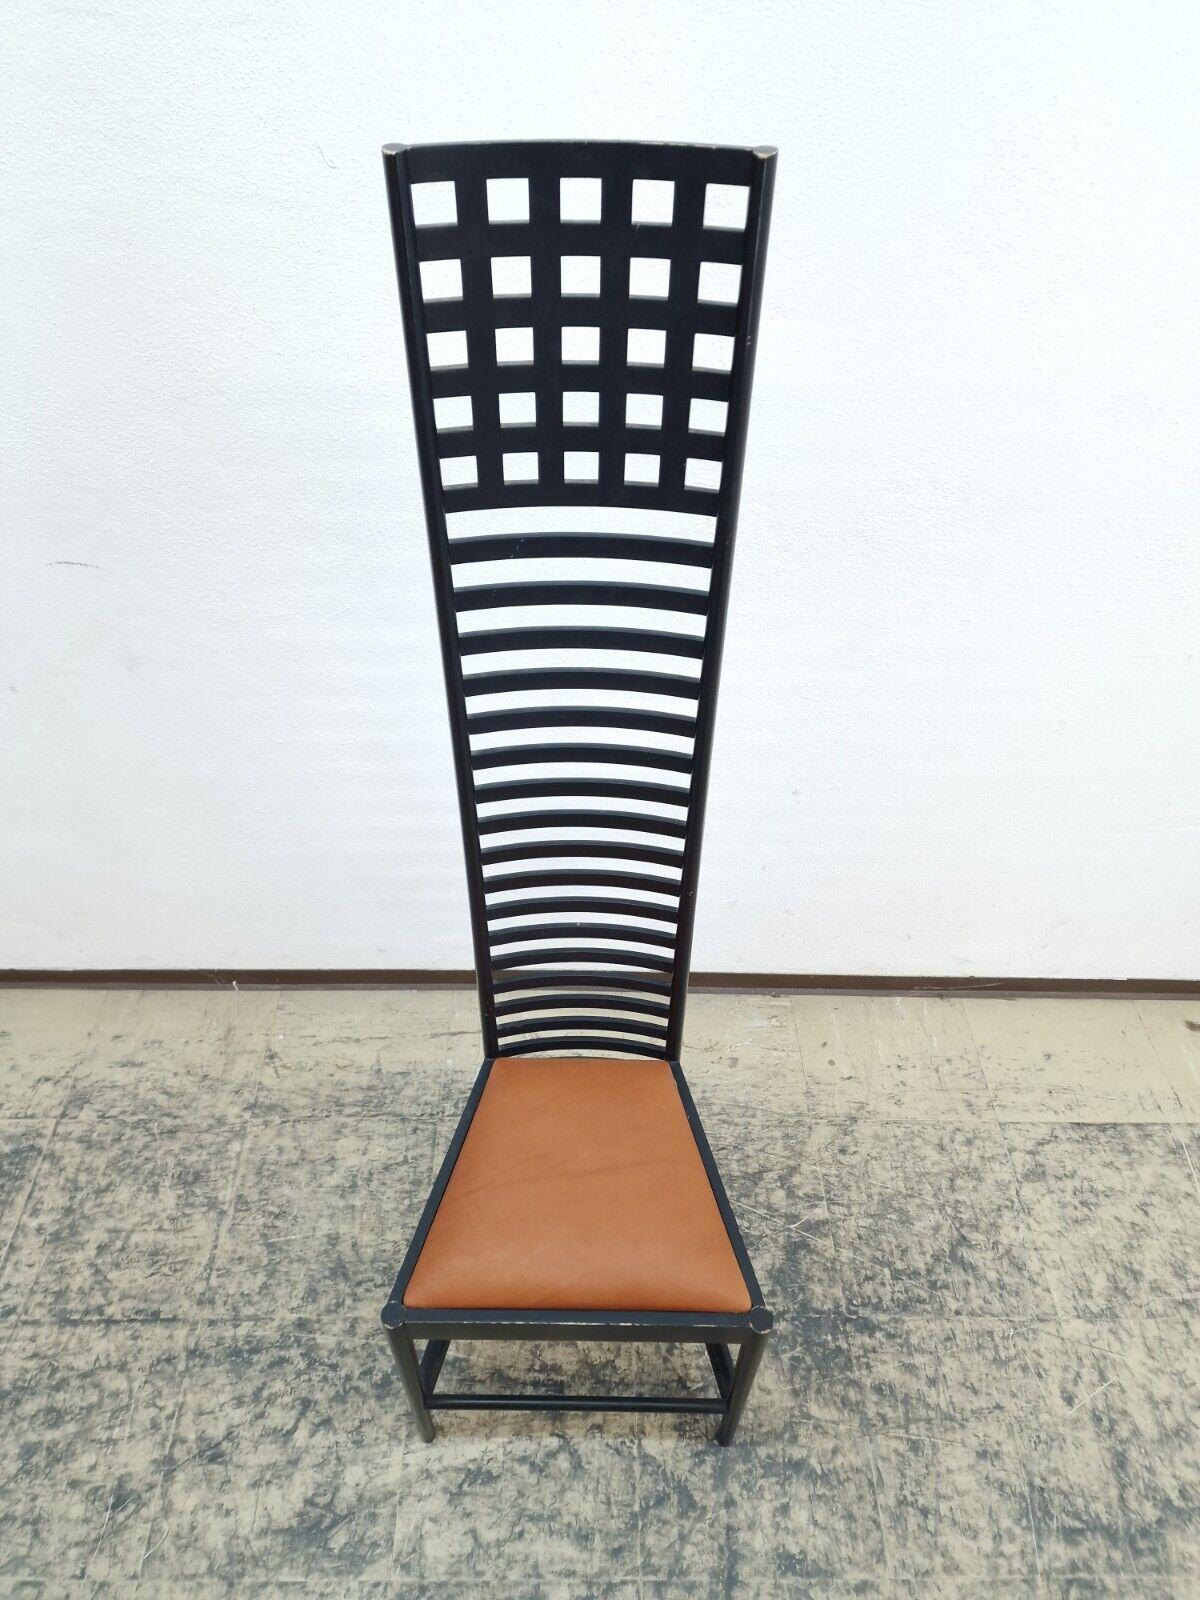 Cassina Rennie Mackintosh Holzstuhl Designerstuhl Hill House chair For Sale 3